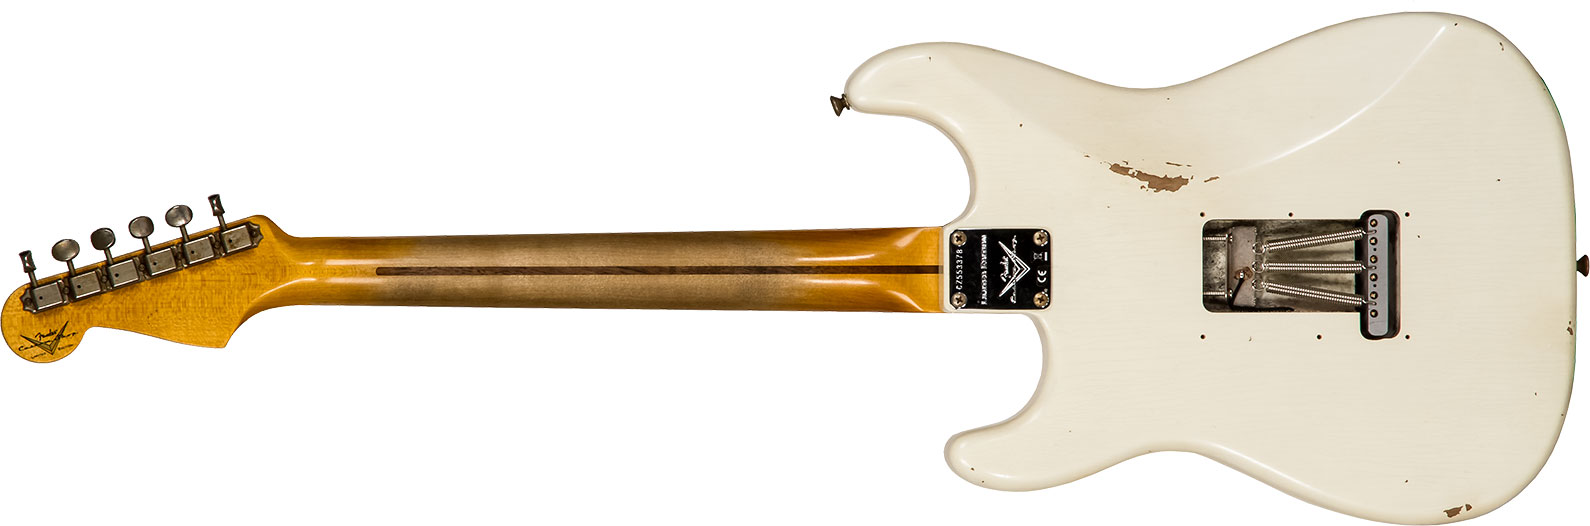 Fender Custom Shop Strat Poblano Ii 3s Trem Mn #cz555378 - Relic Olympic White - Str shape electric guitar - Variation 1